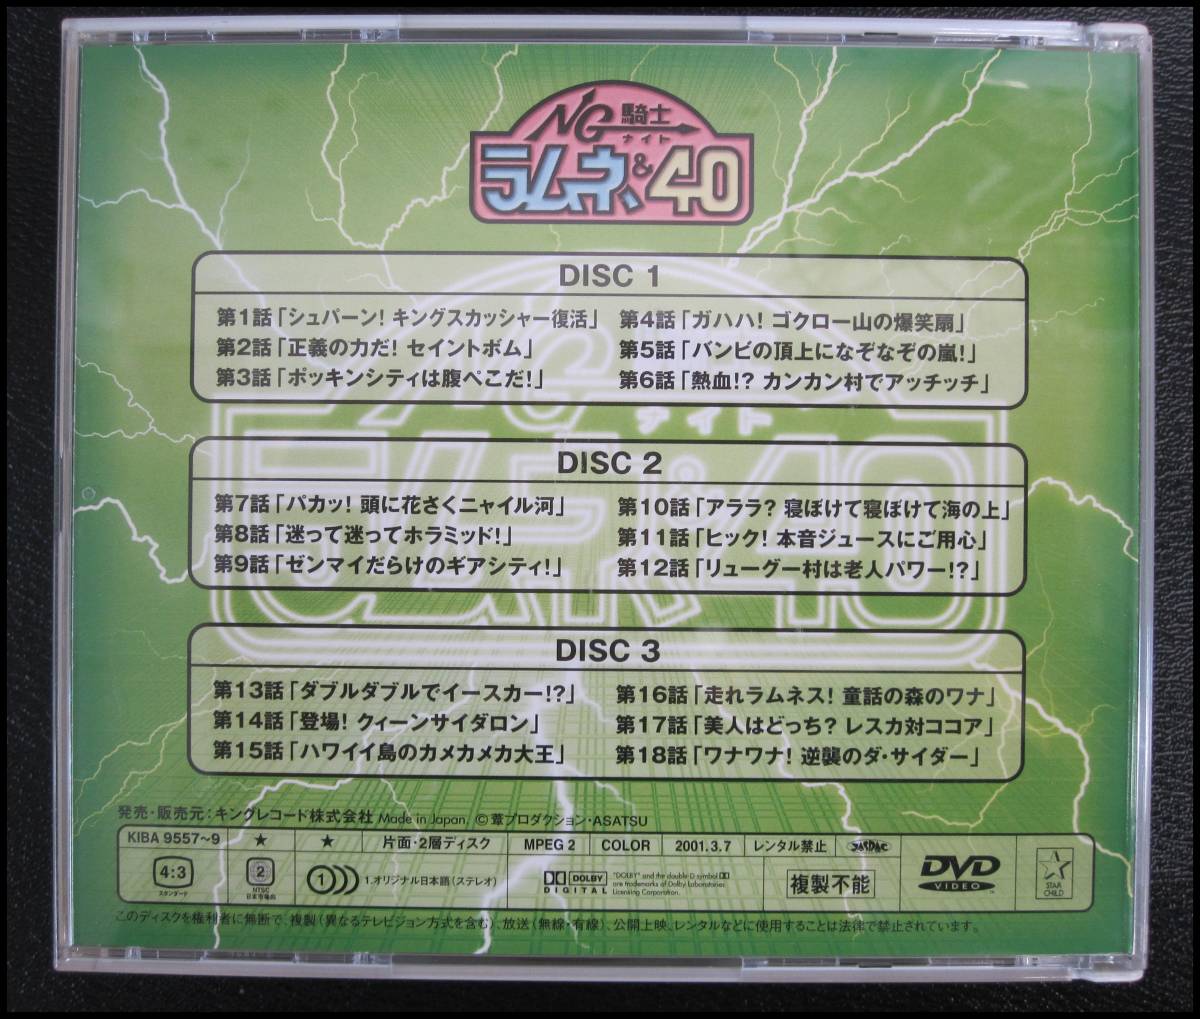 ZN2004p NG騎士 ラムネ&40 DVD-BOX 完全初回限定生産盤 テレホンカード2枚組 コンプリートカタログデータ付き_画像6